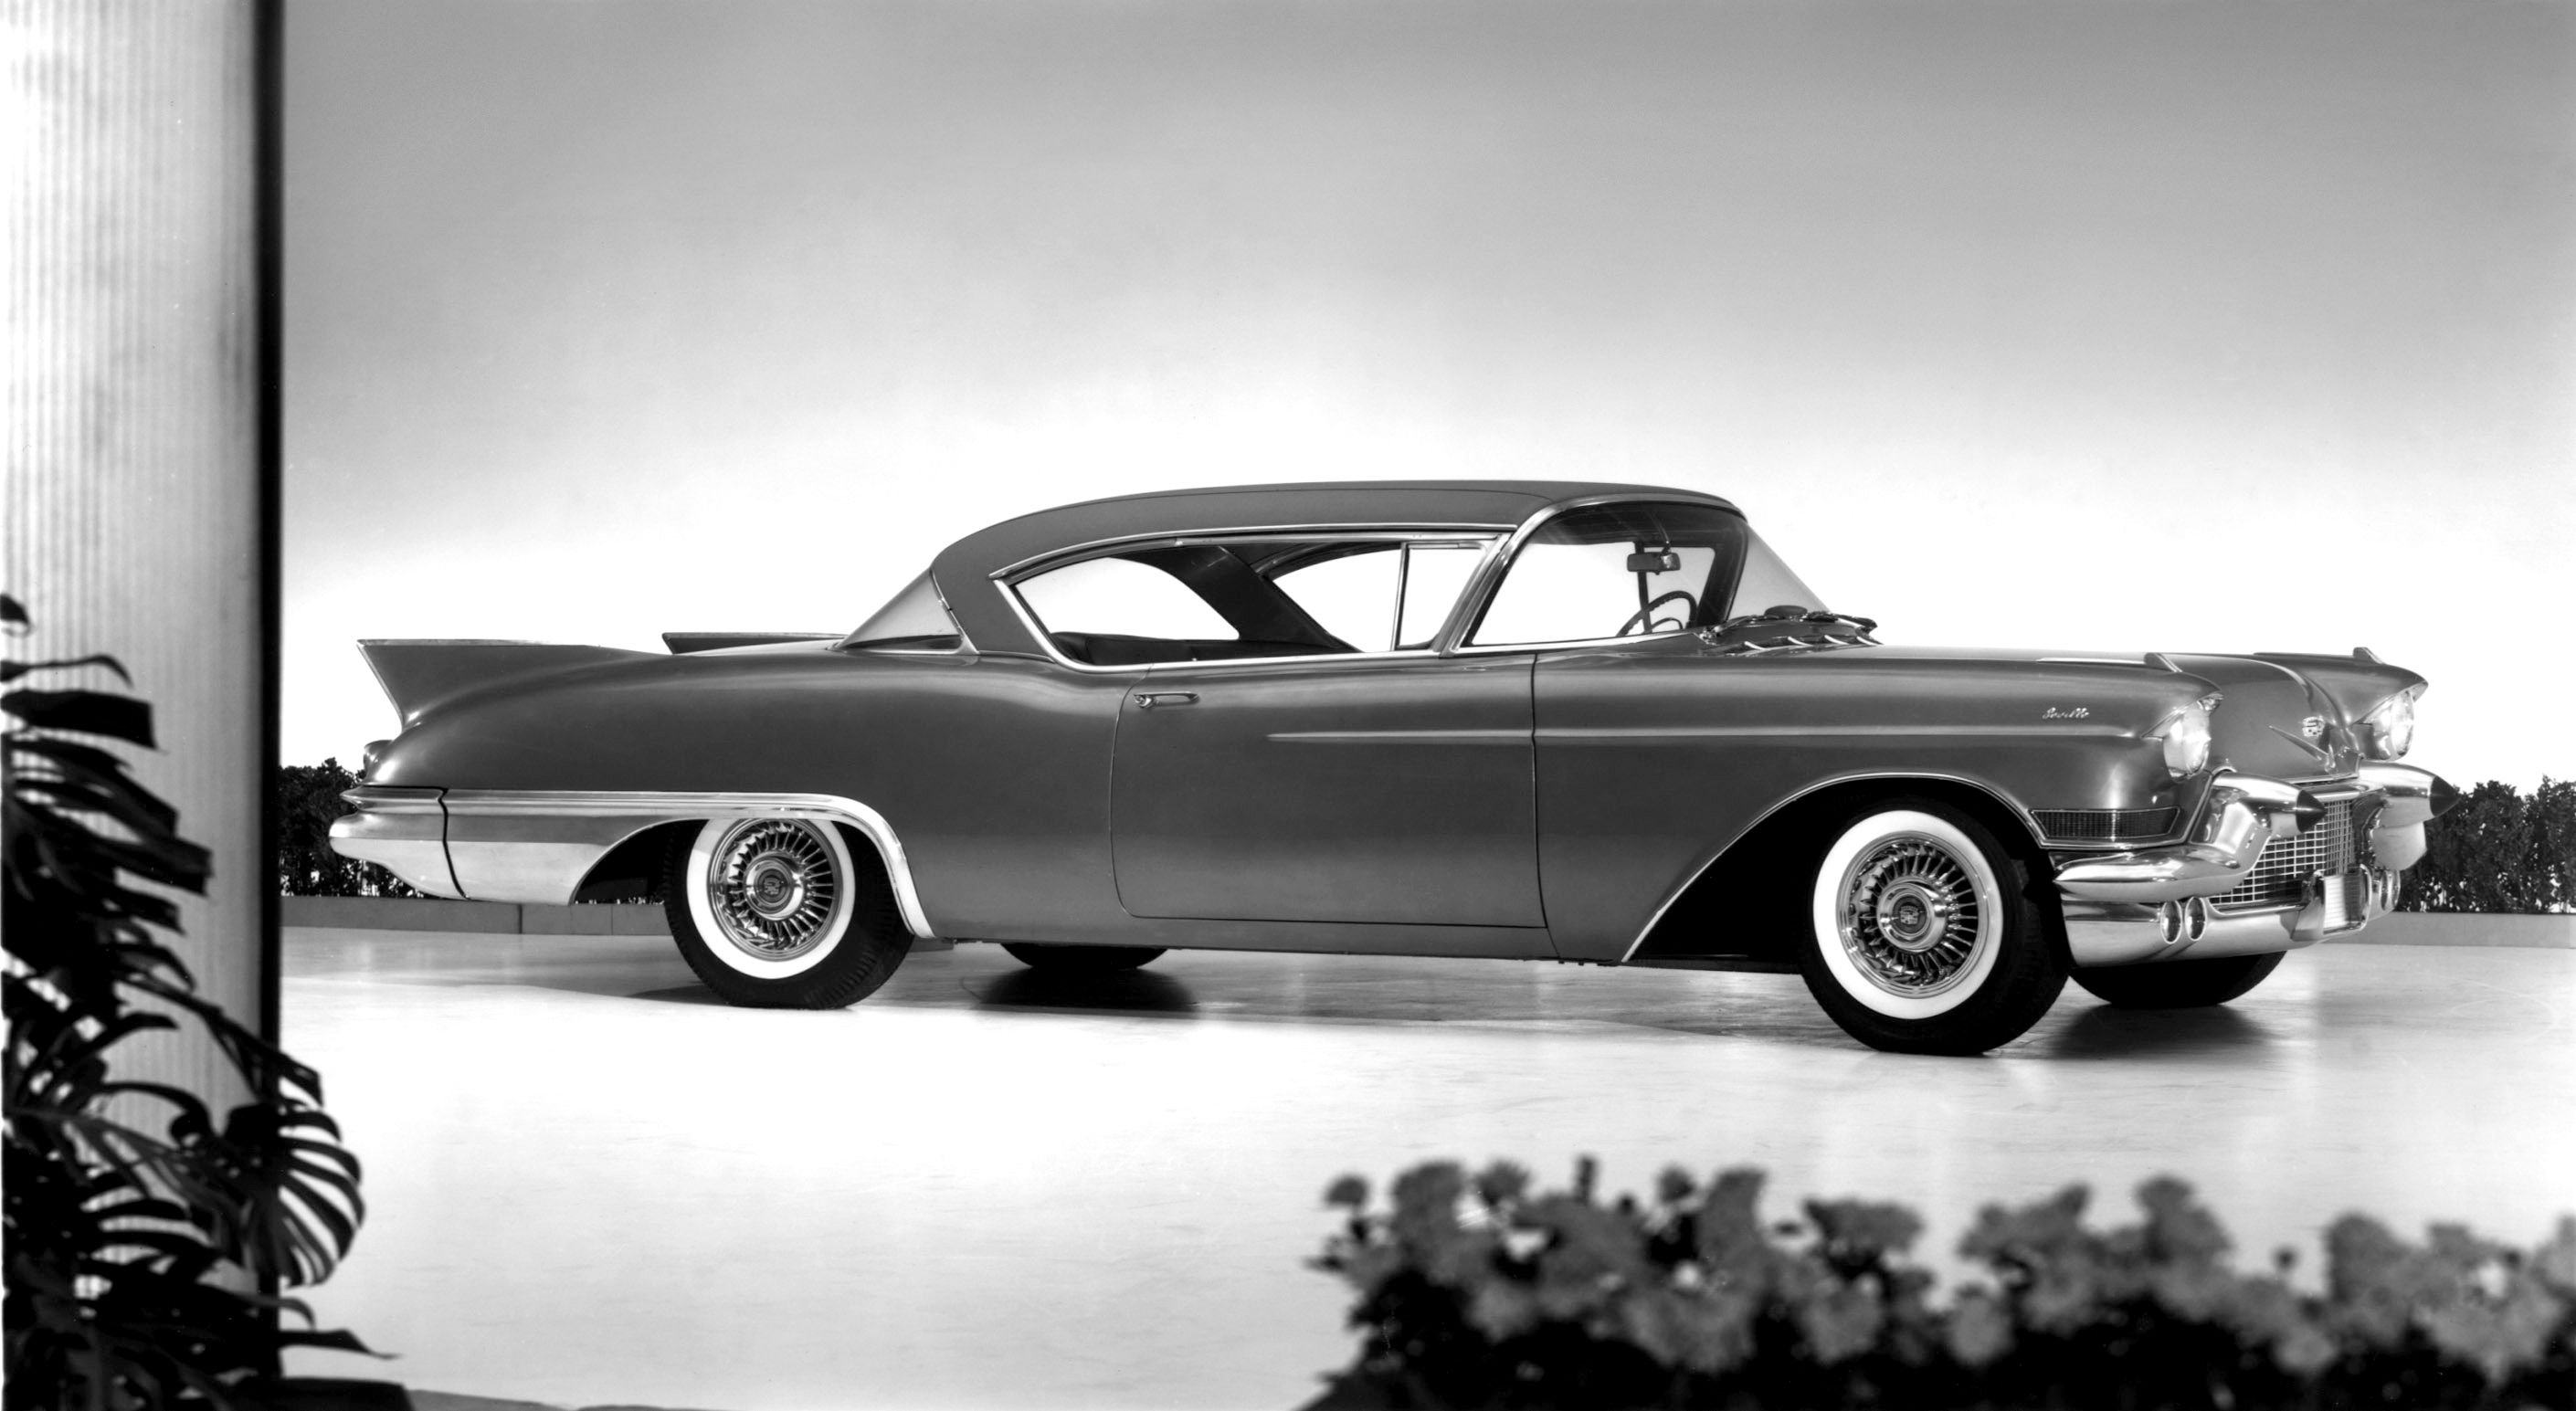 1957 Cadillac Factory Photos Page 1